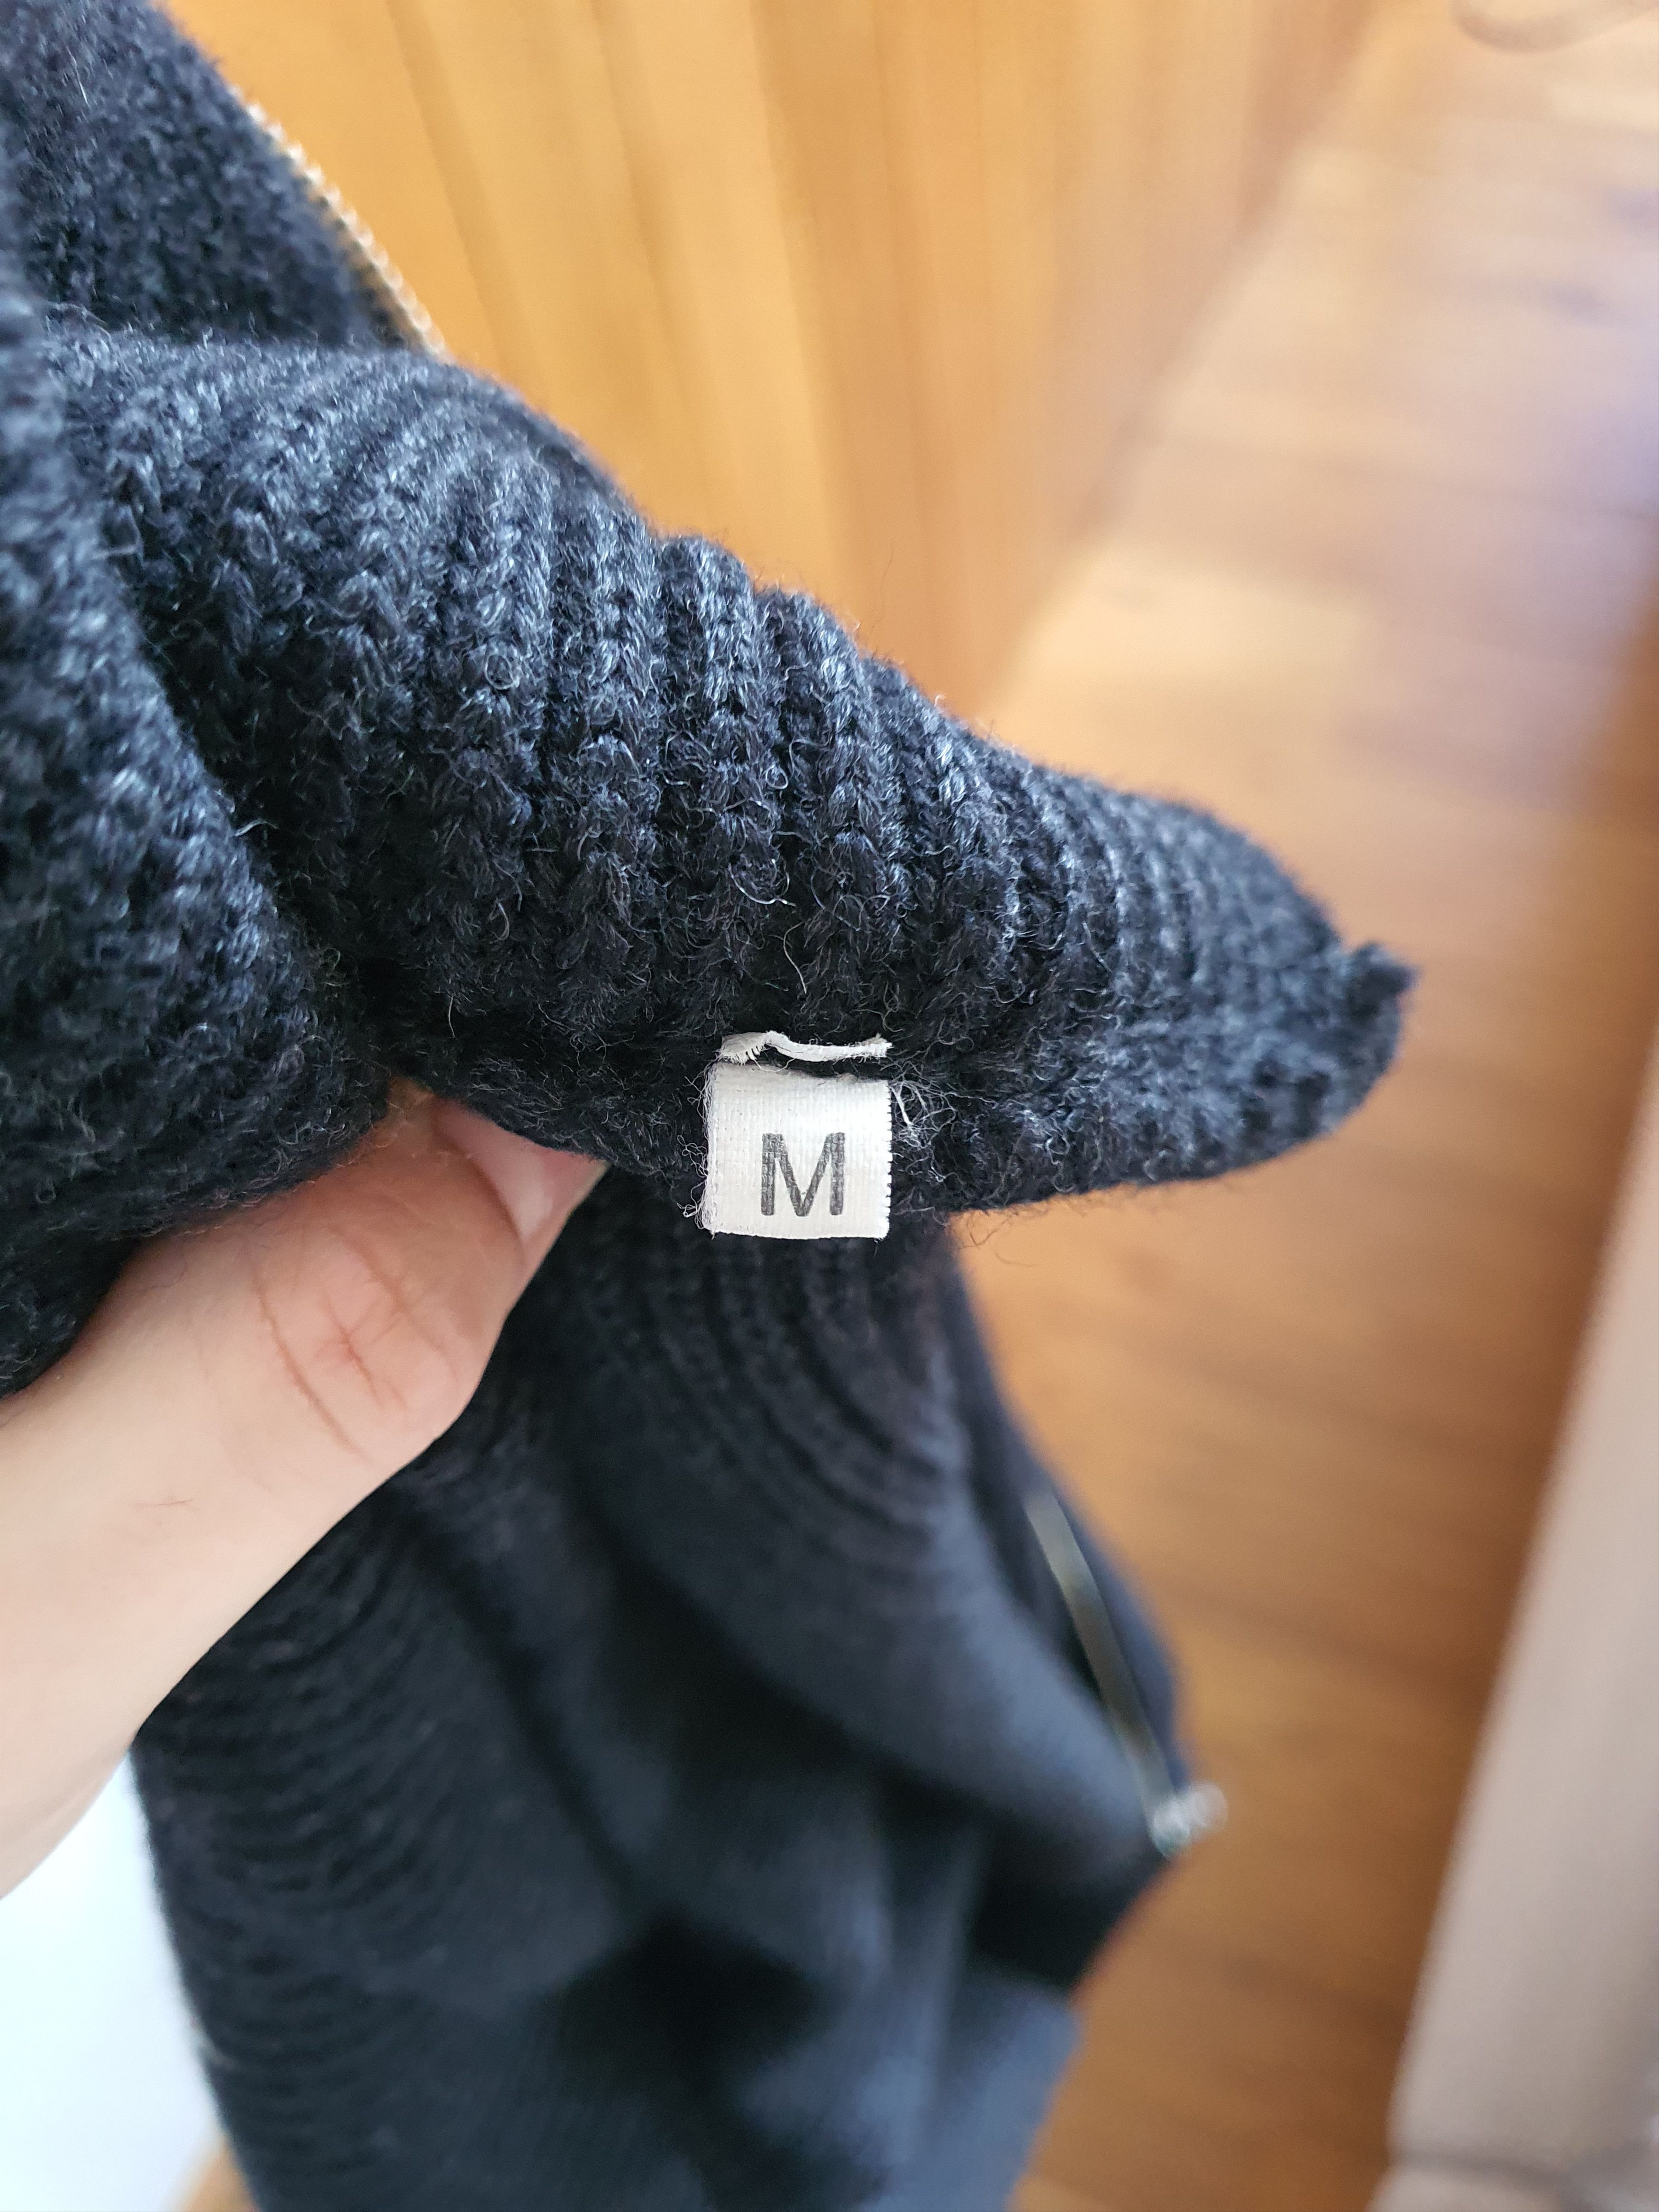 Maison Margiela Martin Margiela Sleeveless Miss Deanna 'Camionneur' Knit |  Grailed